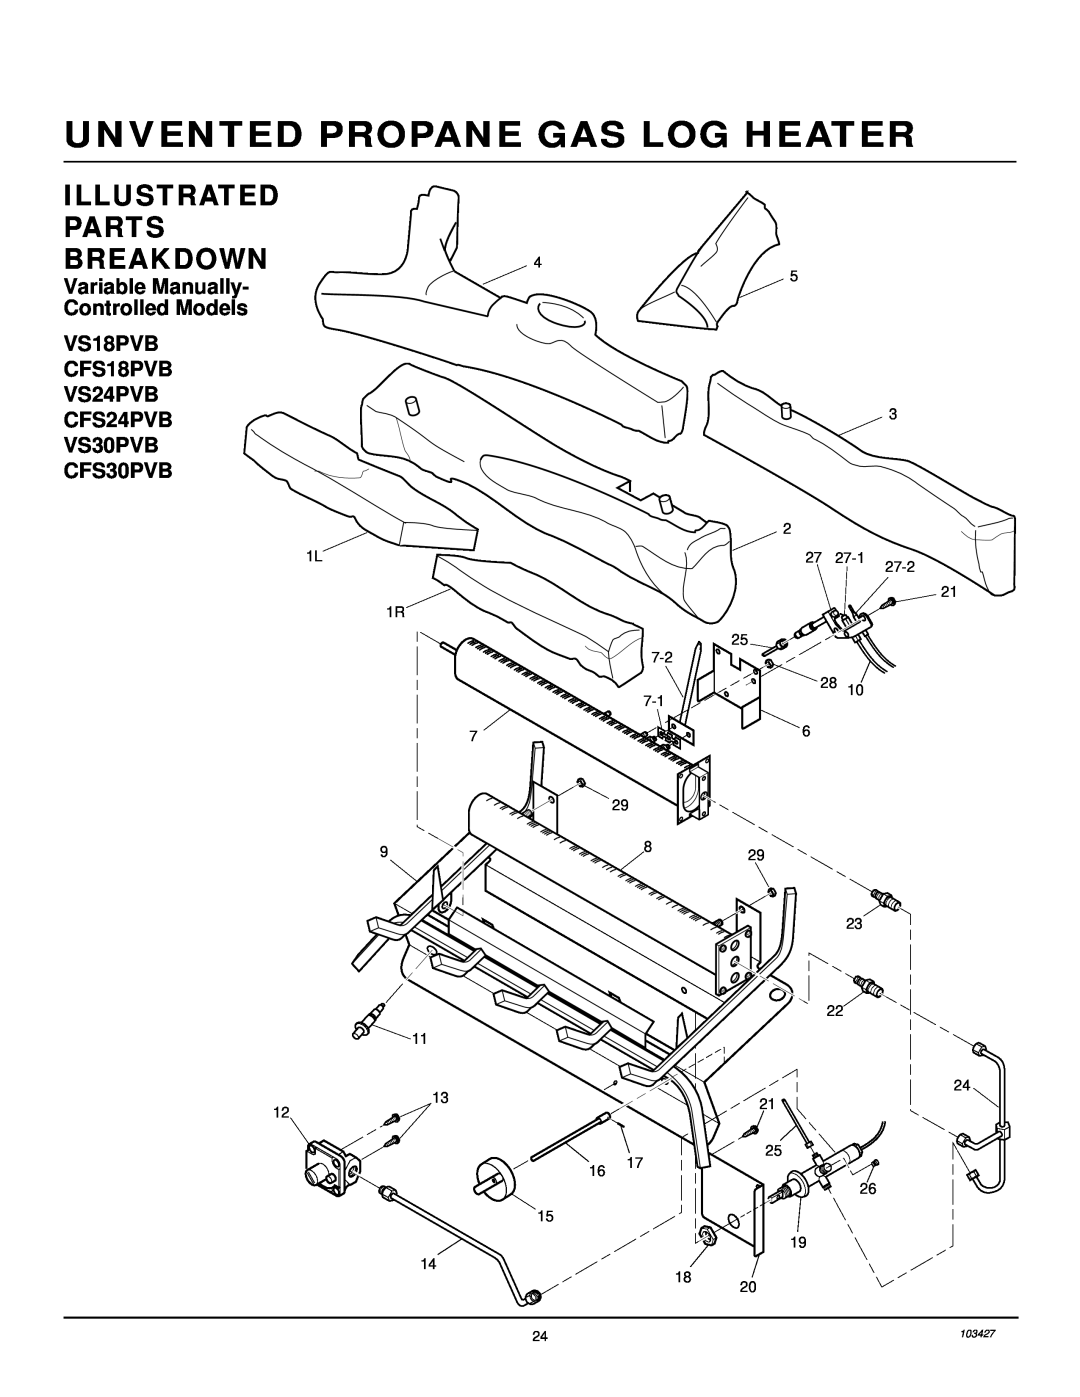 Desa Unvented Propane Gas Log Heater Model Split Oak and American Oak Design ILLUSTRATED PARTS BREAKDOWN4 